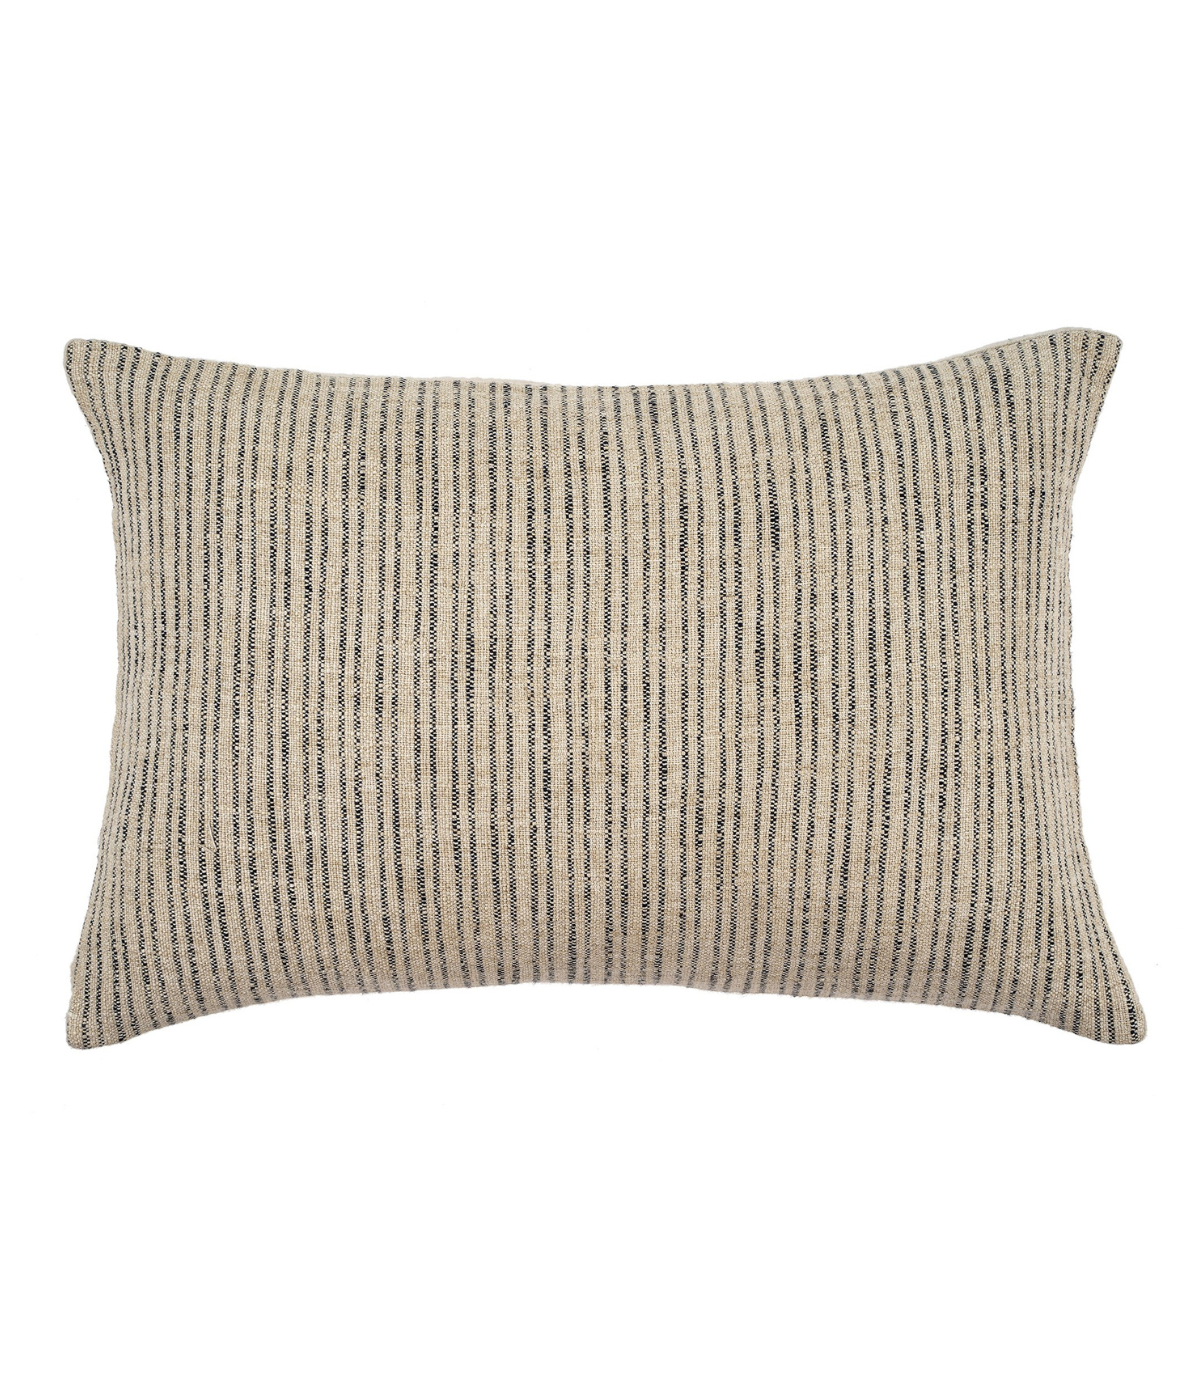 Country Stripe Linen Pillow